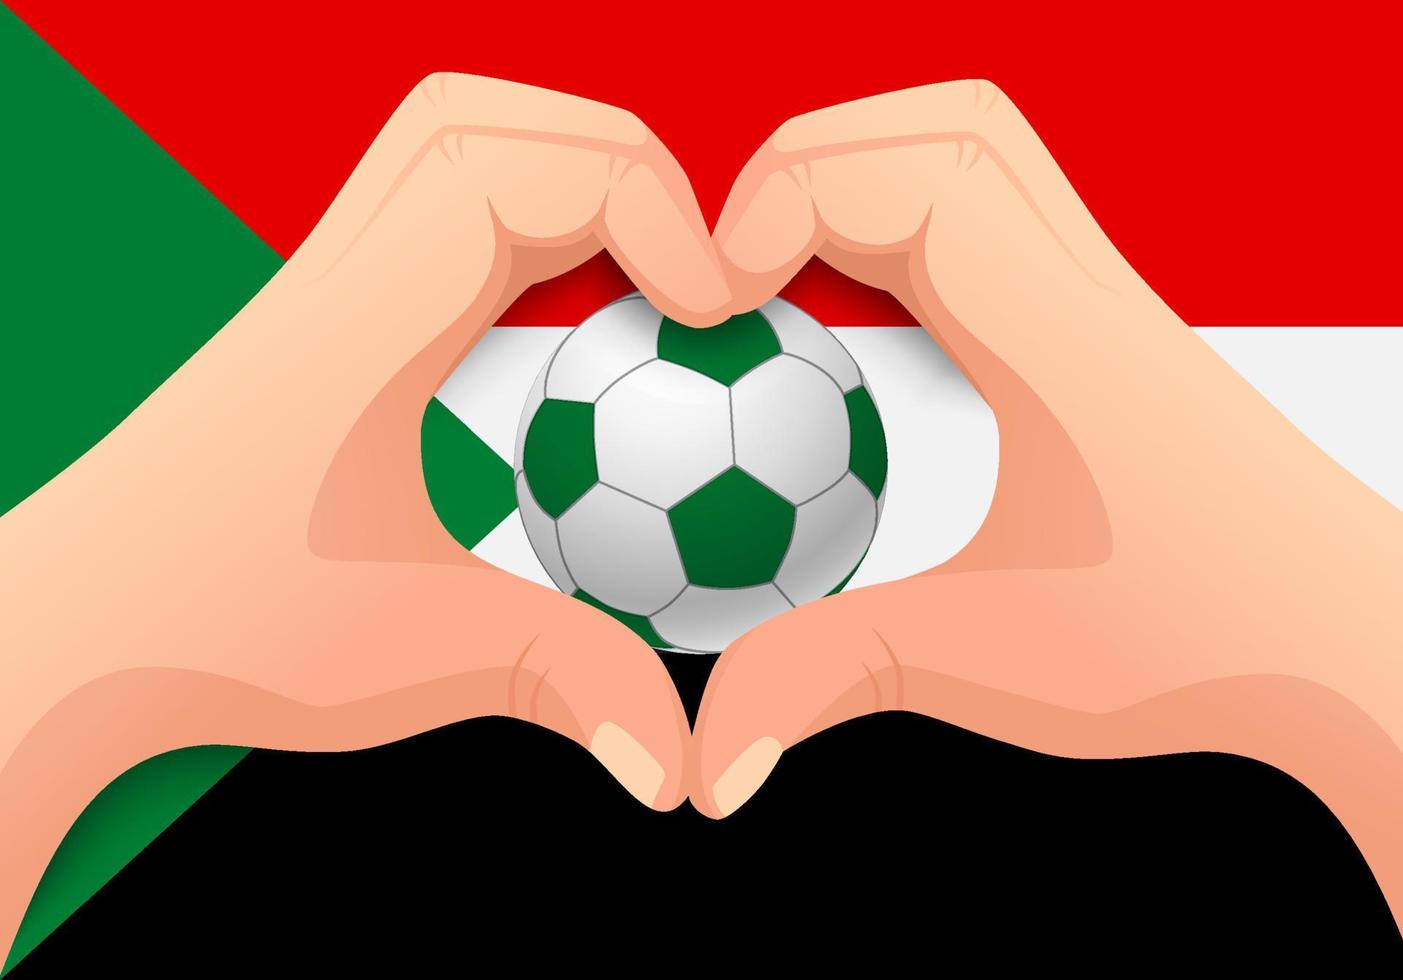 sudan soccer ball and hand heart shape vector